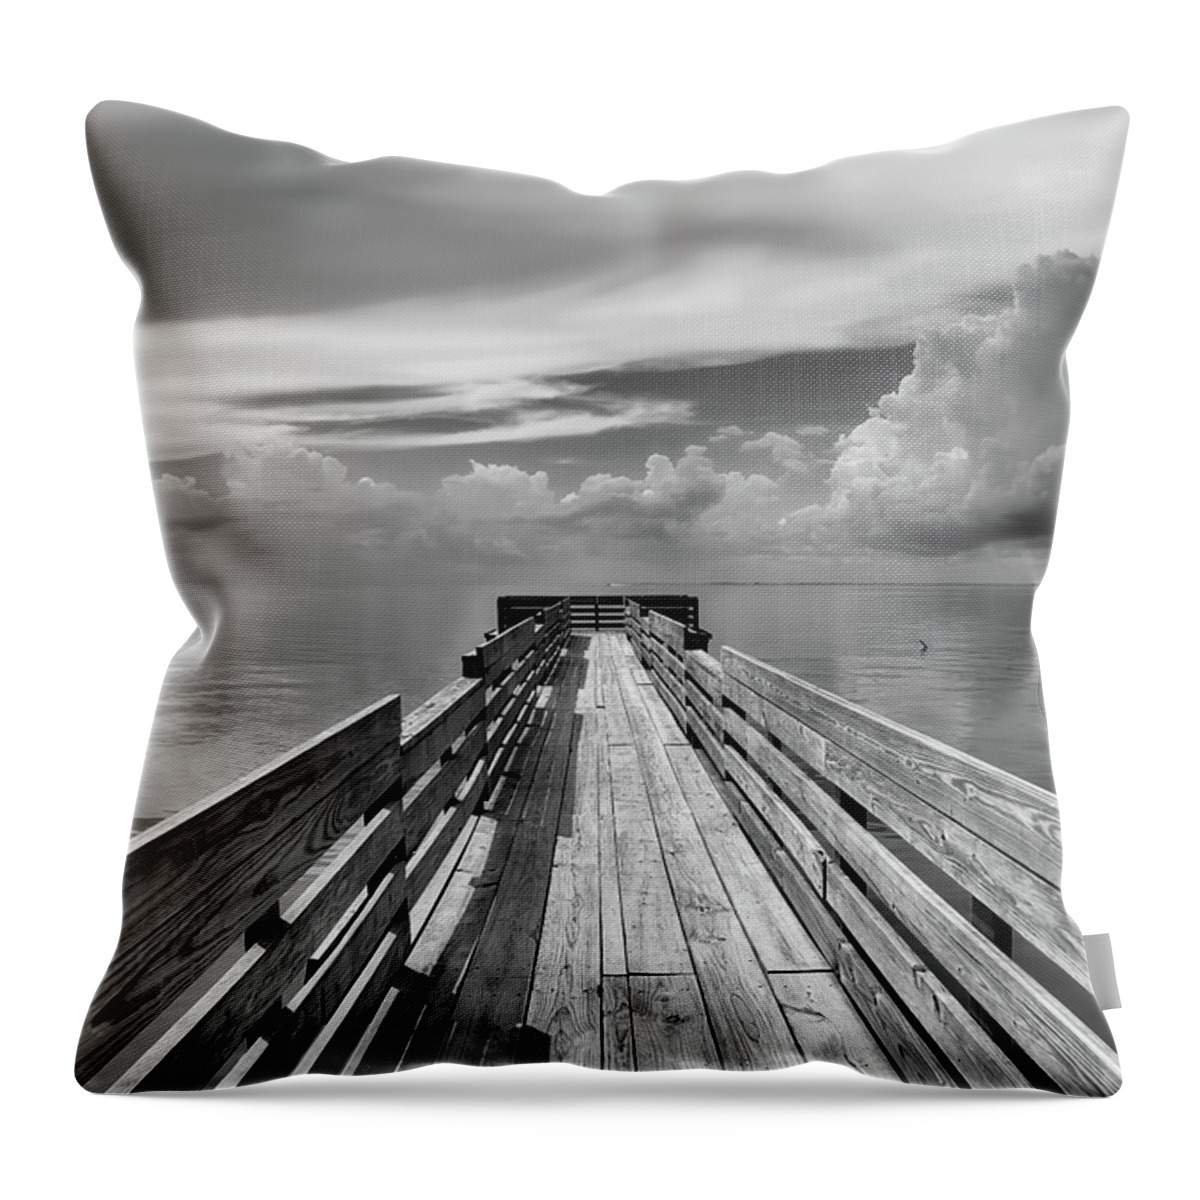 Texas Pier Throw Pillow featuring the photograph A Texas Pier by Steven Michael